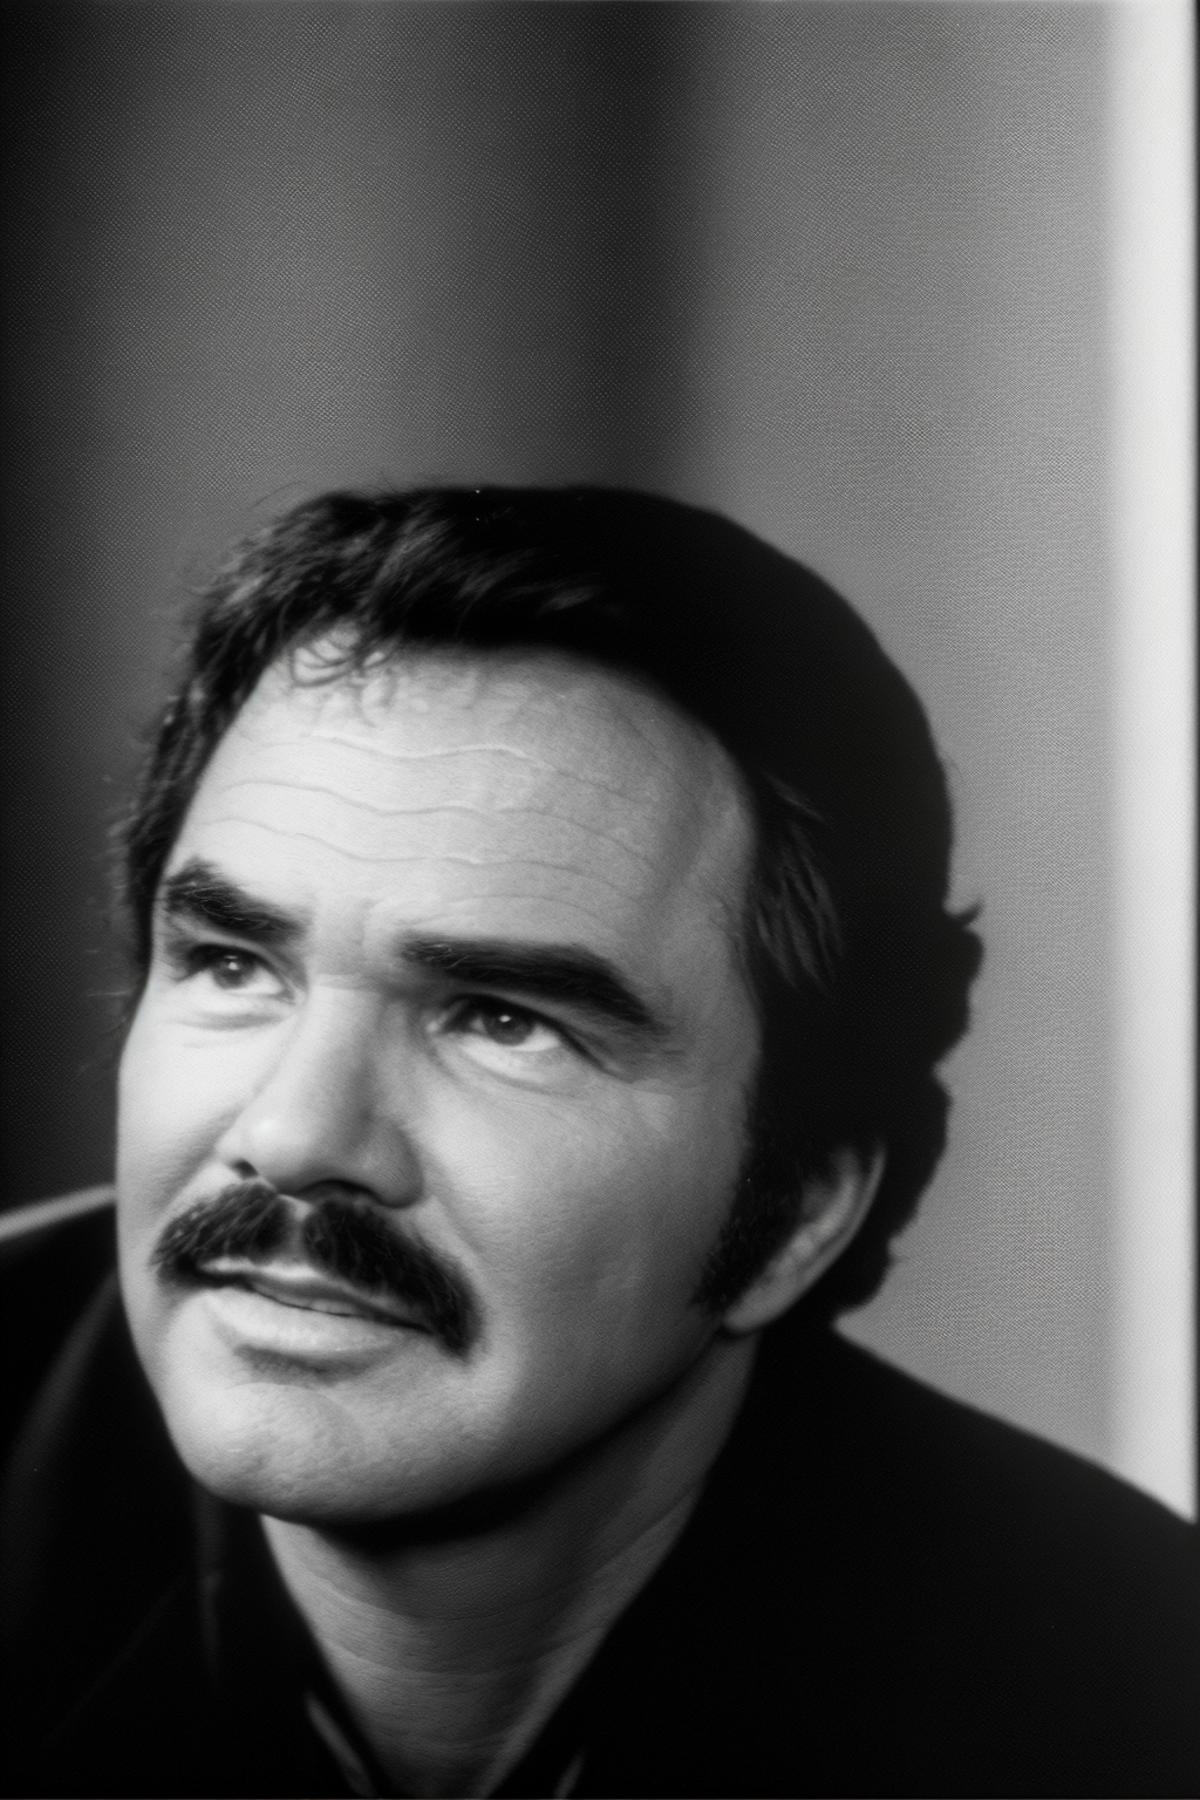 Actor: Burt Reynolds image by trdahl